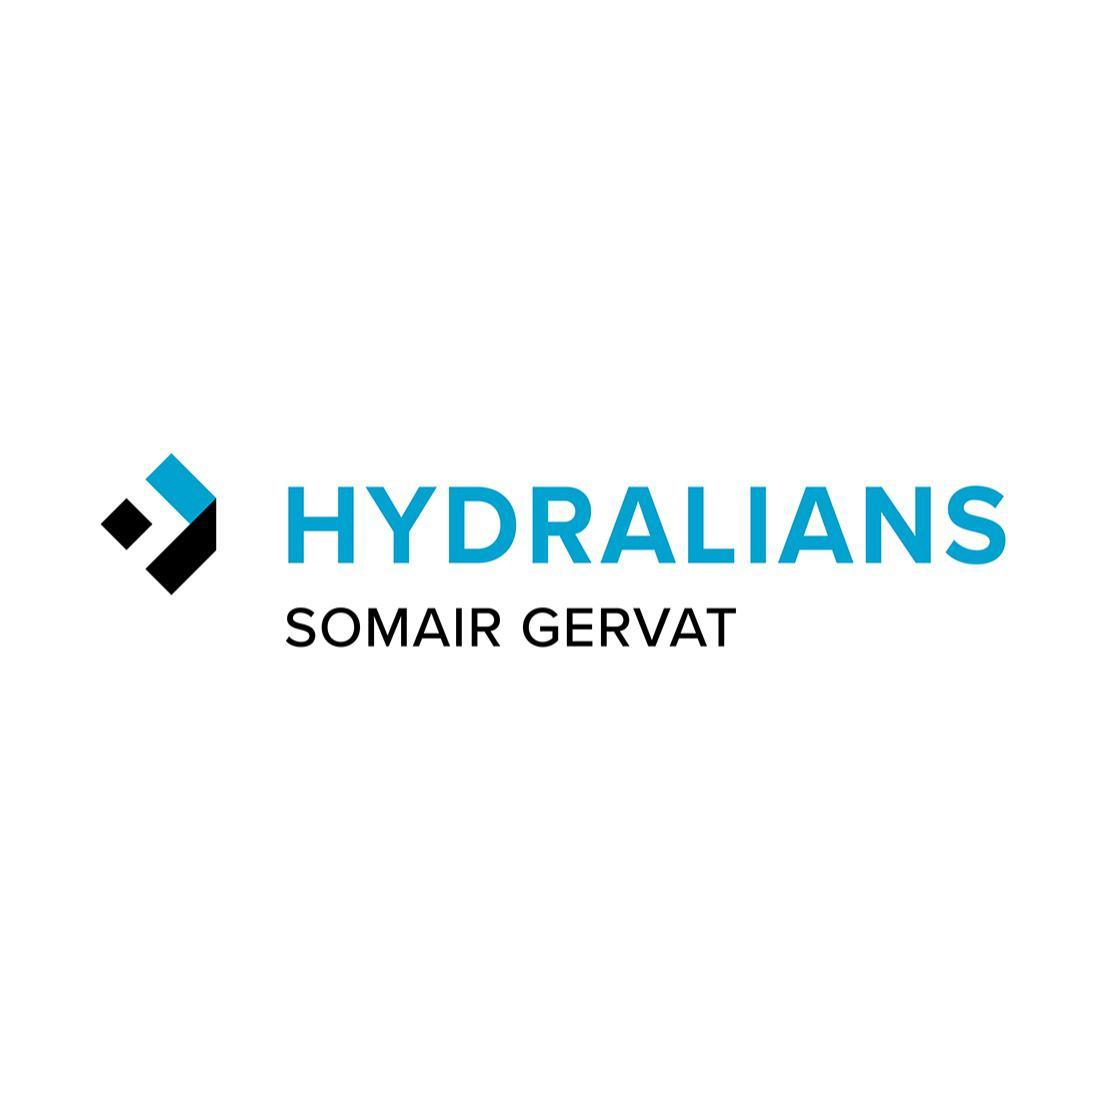 Hydralians Somair Gervat Pontault-combault Pontault Combault